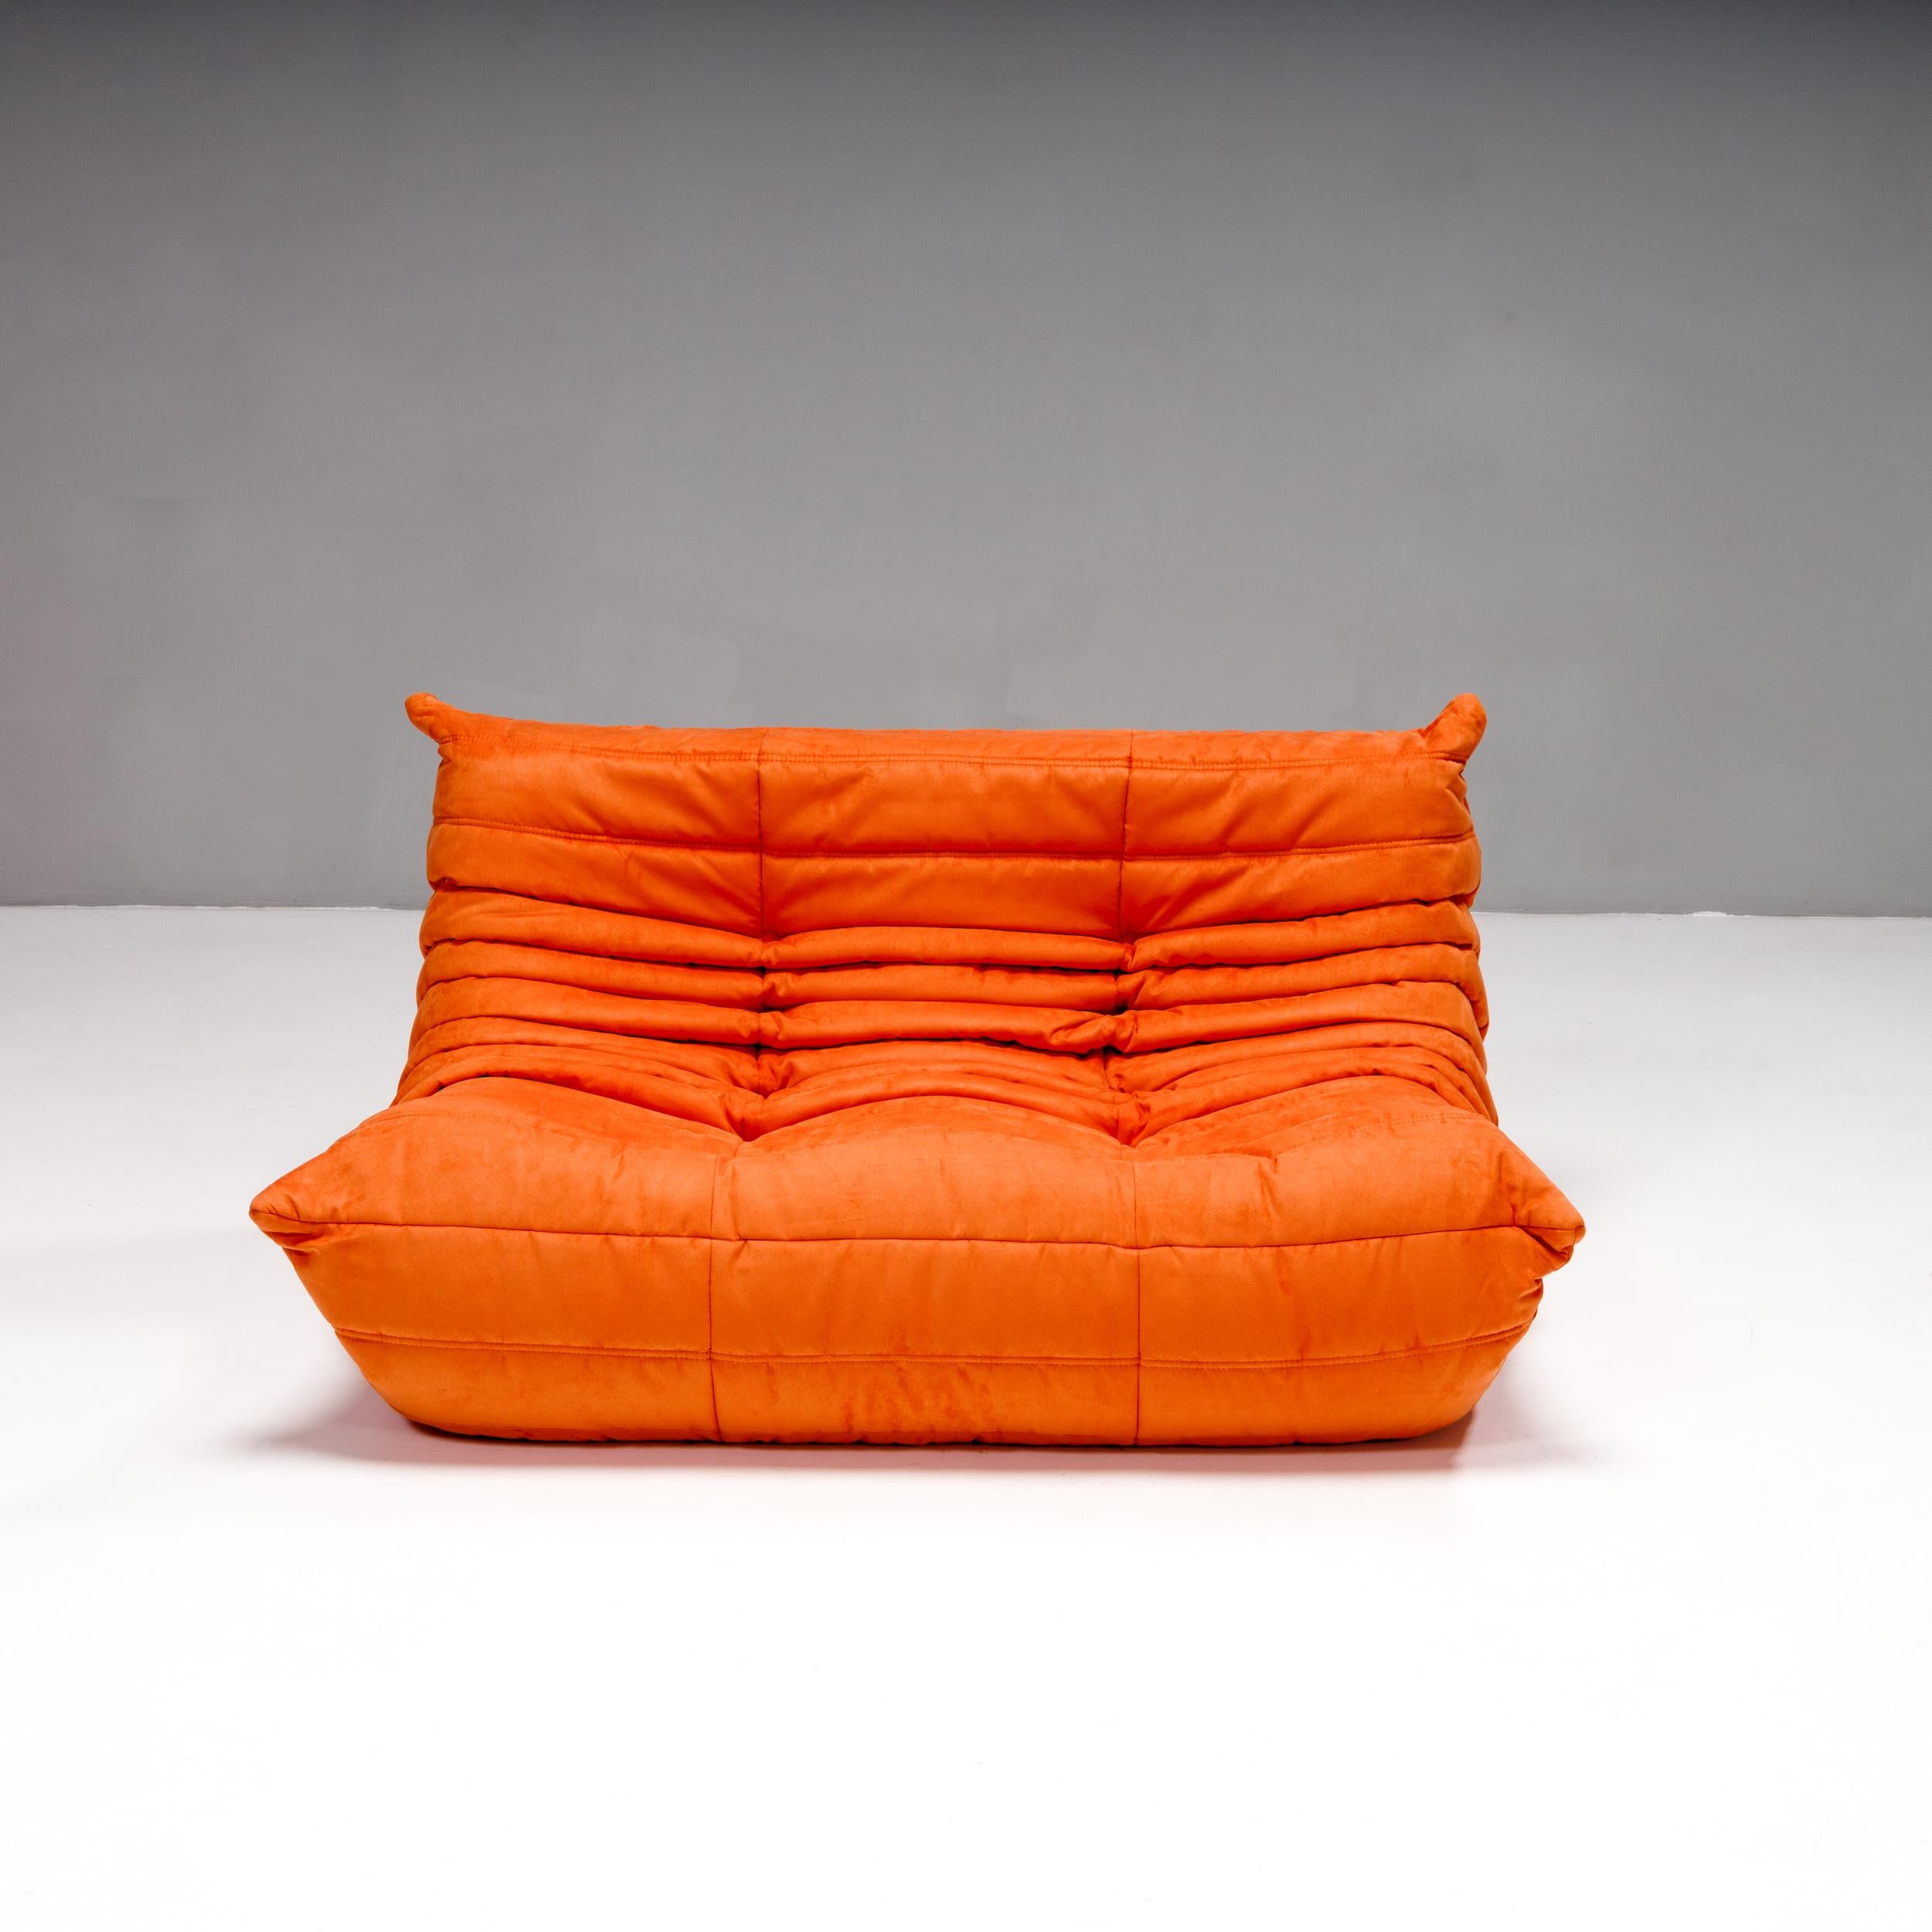 Michel Ducaroy for Ligne Roset Orange Togo Modular Sofas, Set of 5 For Sale 3